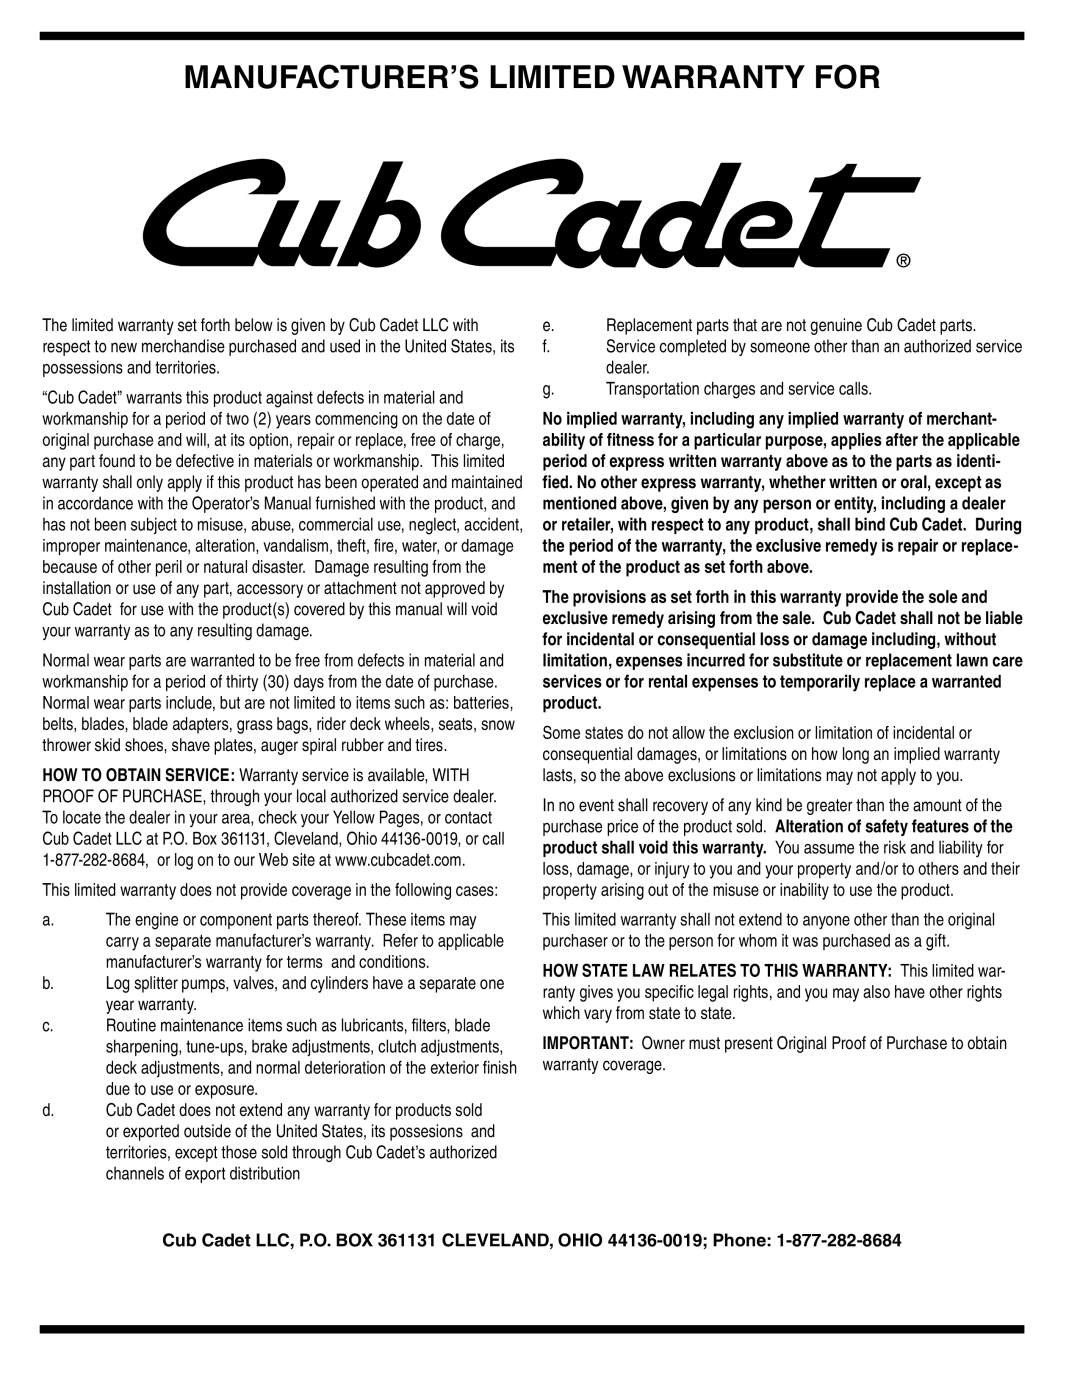 Cub Cadet 109 warranty Manufacturer’S Limited Warranty For, Cub Cadet LLC, P.O. BOX 361131 CLEVELAND, OHIO 44136-0019 Phone 